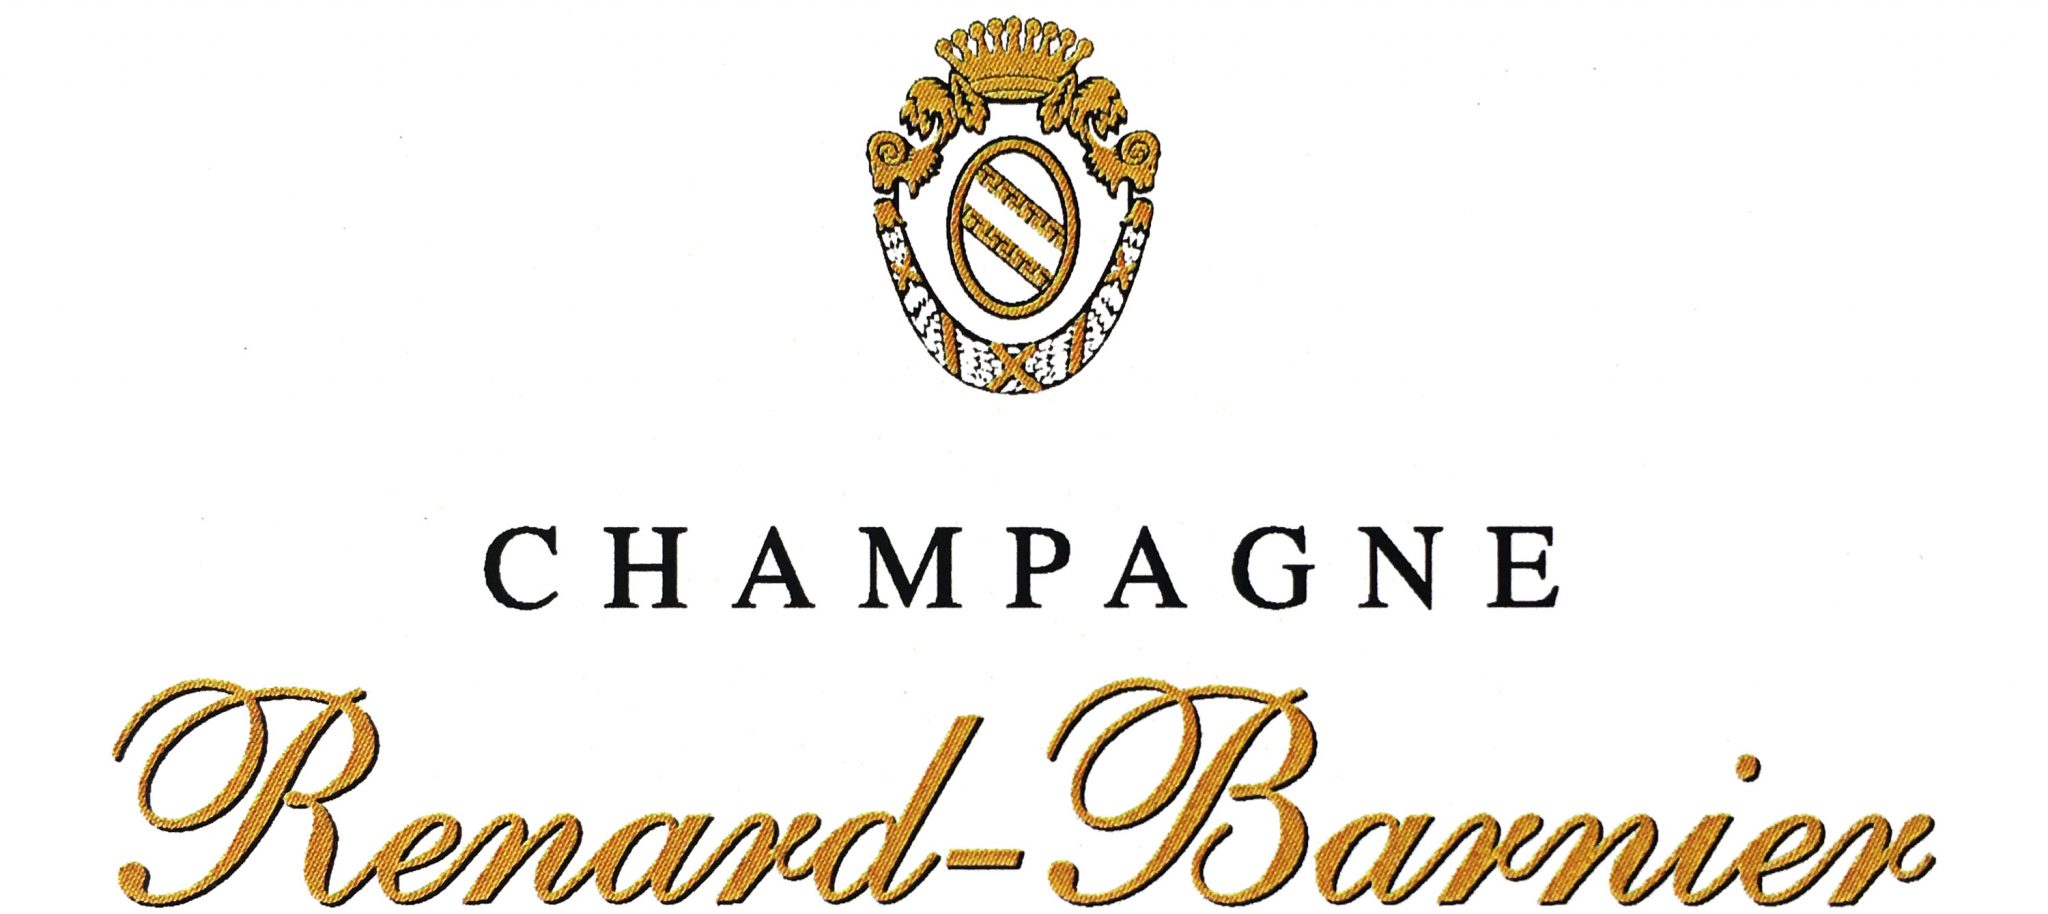 Champagne Renard-Barnier